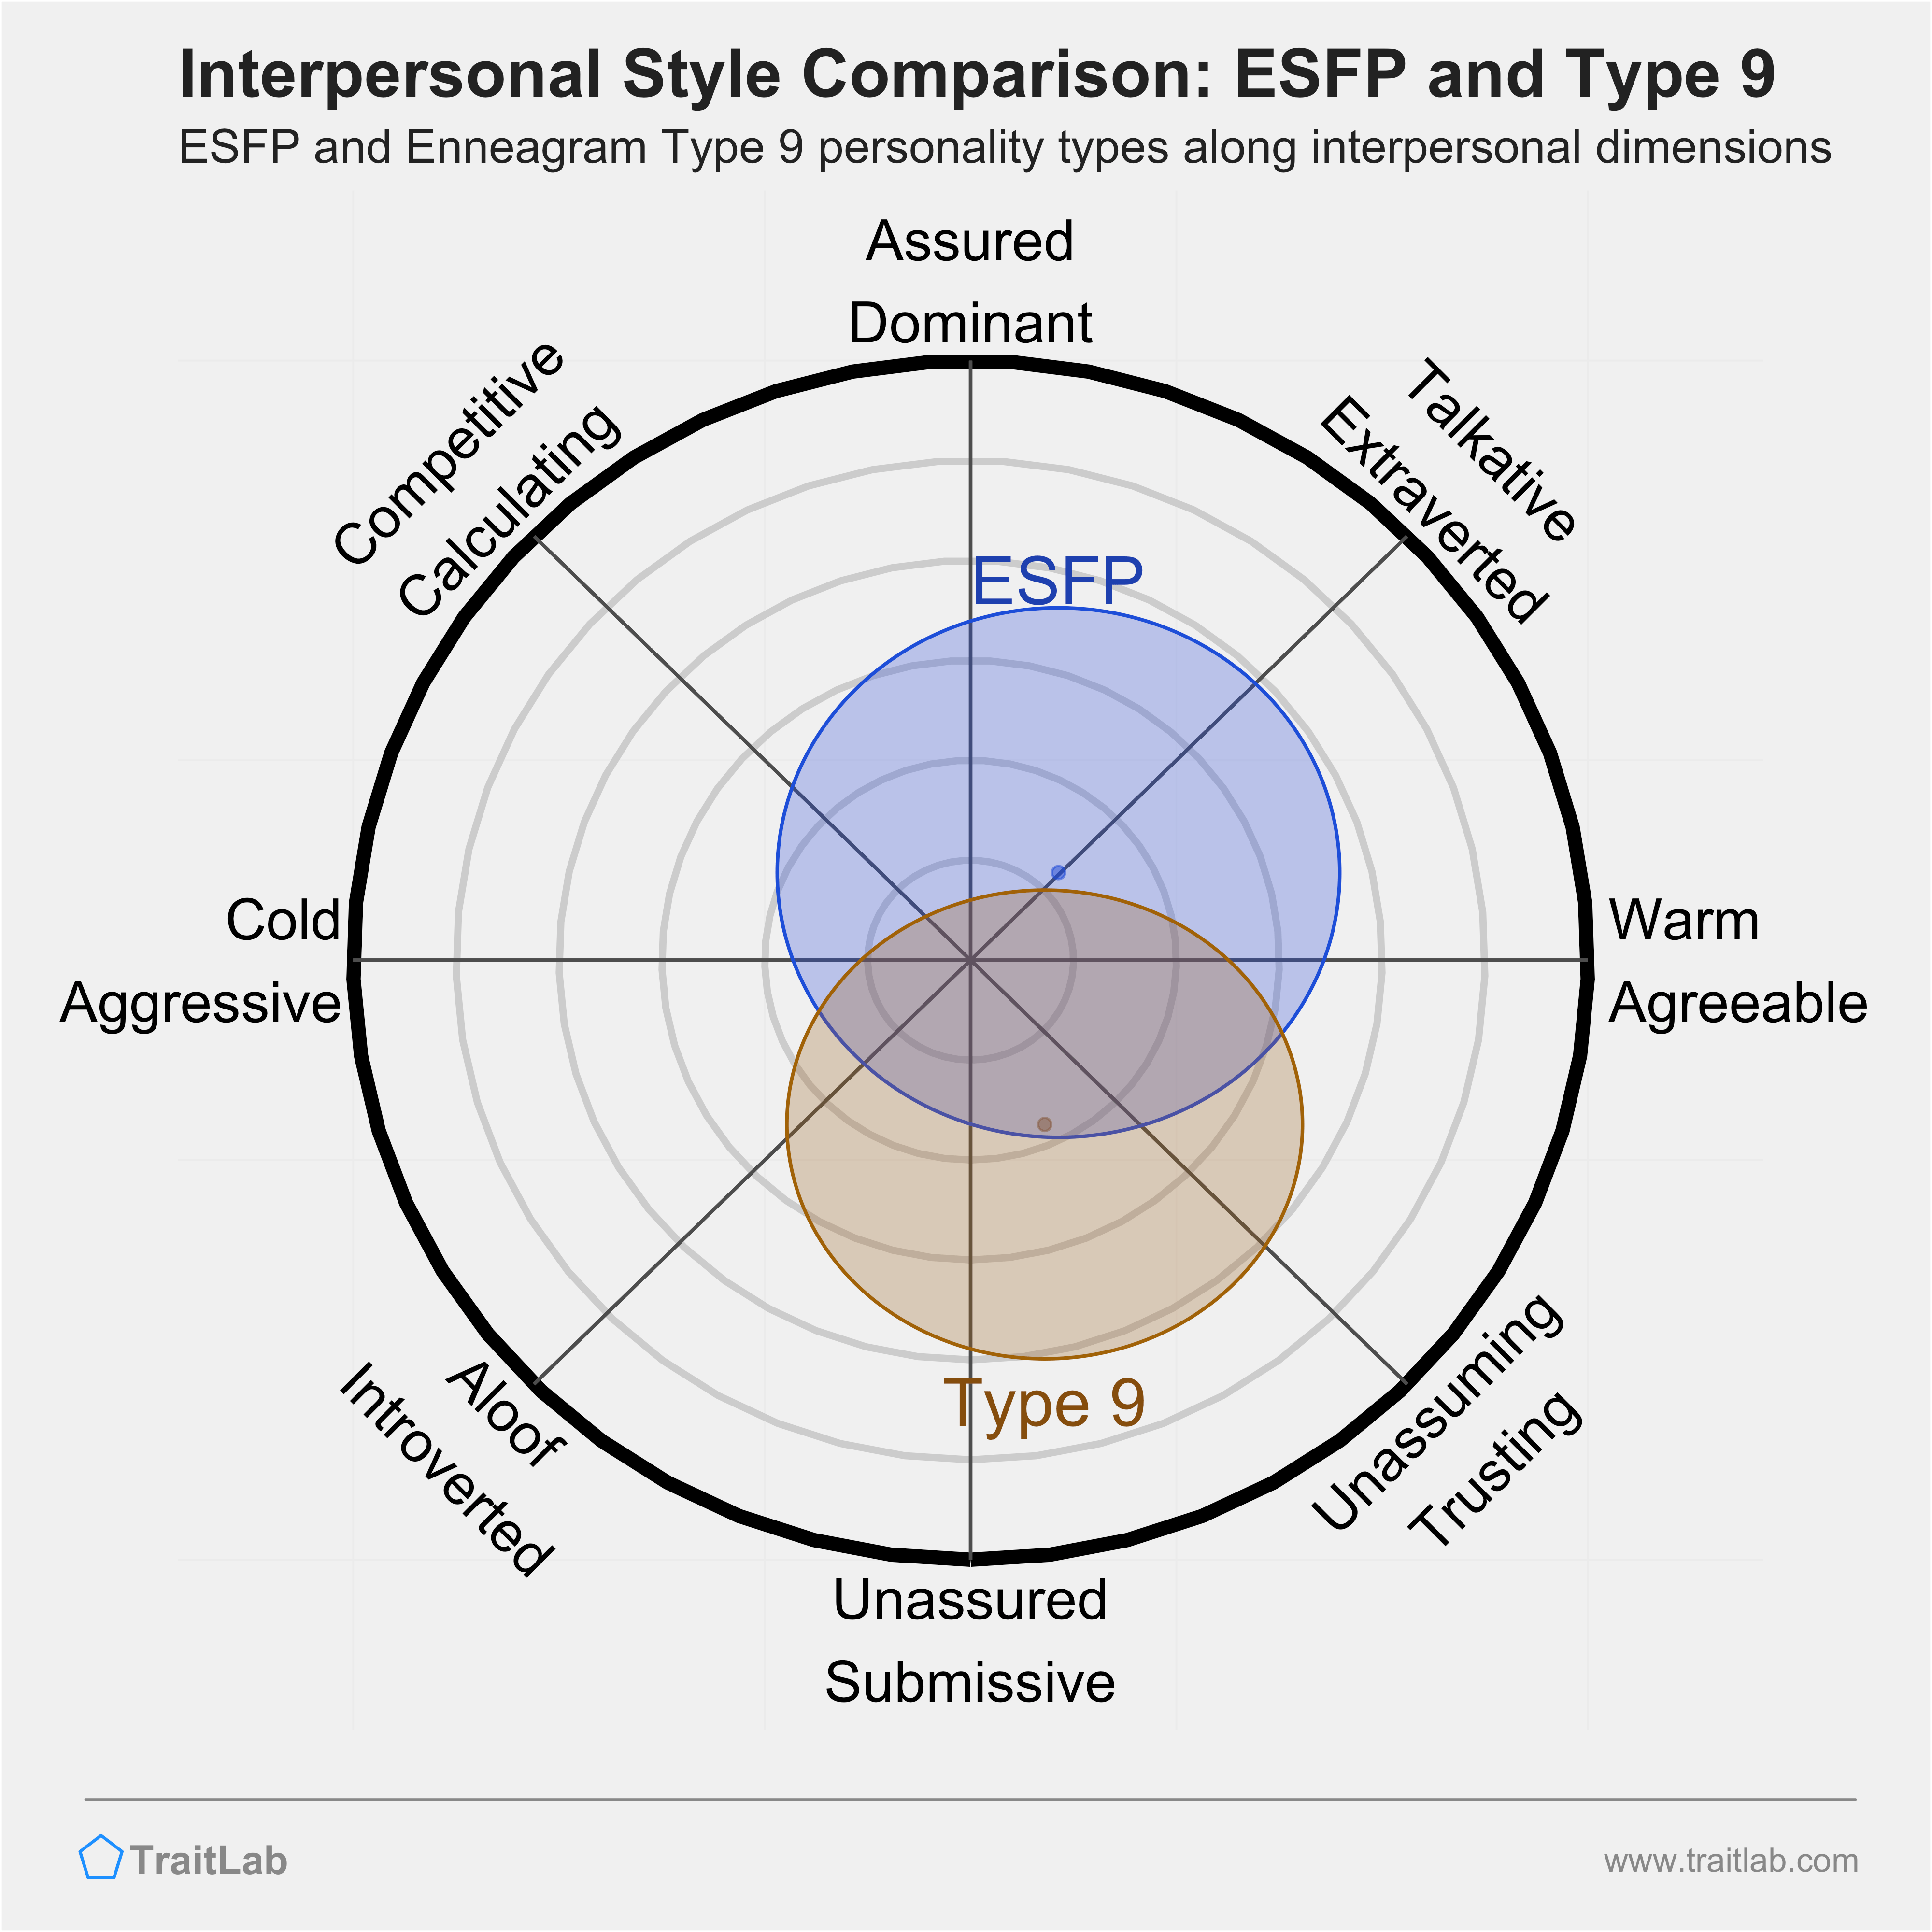 Enneagram ESFP and Type 9 comparison across interpersonal dimensions